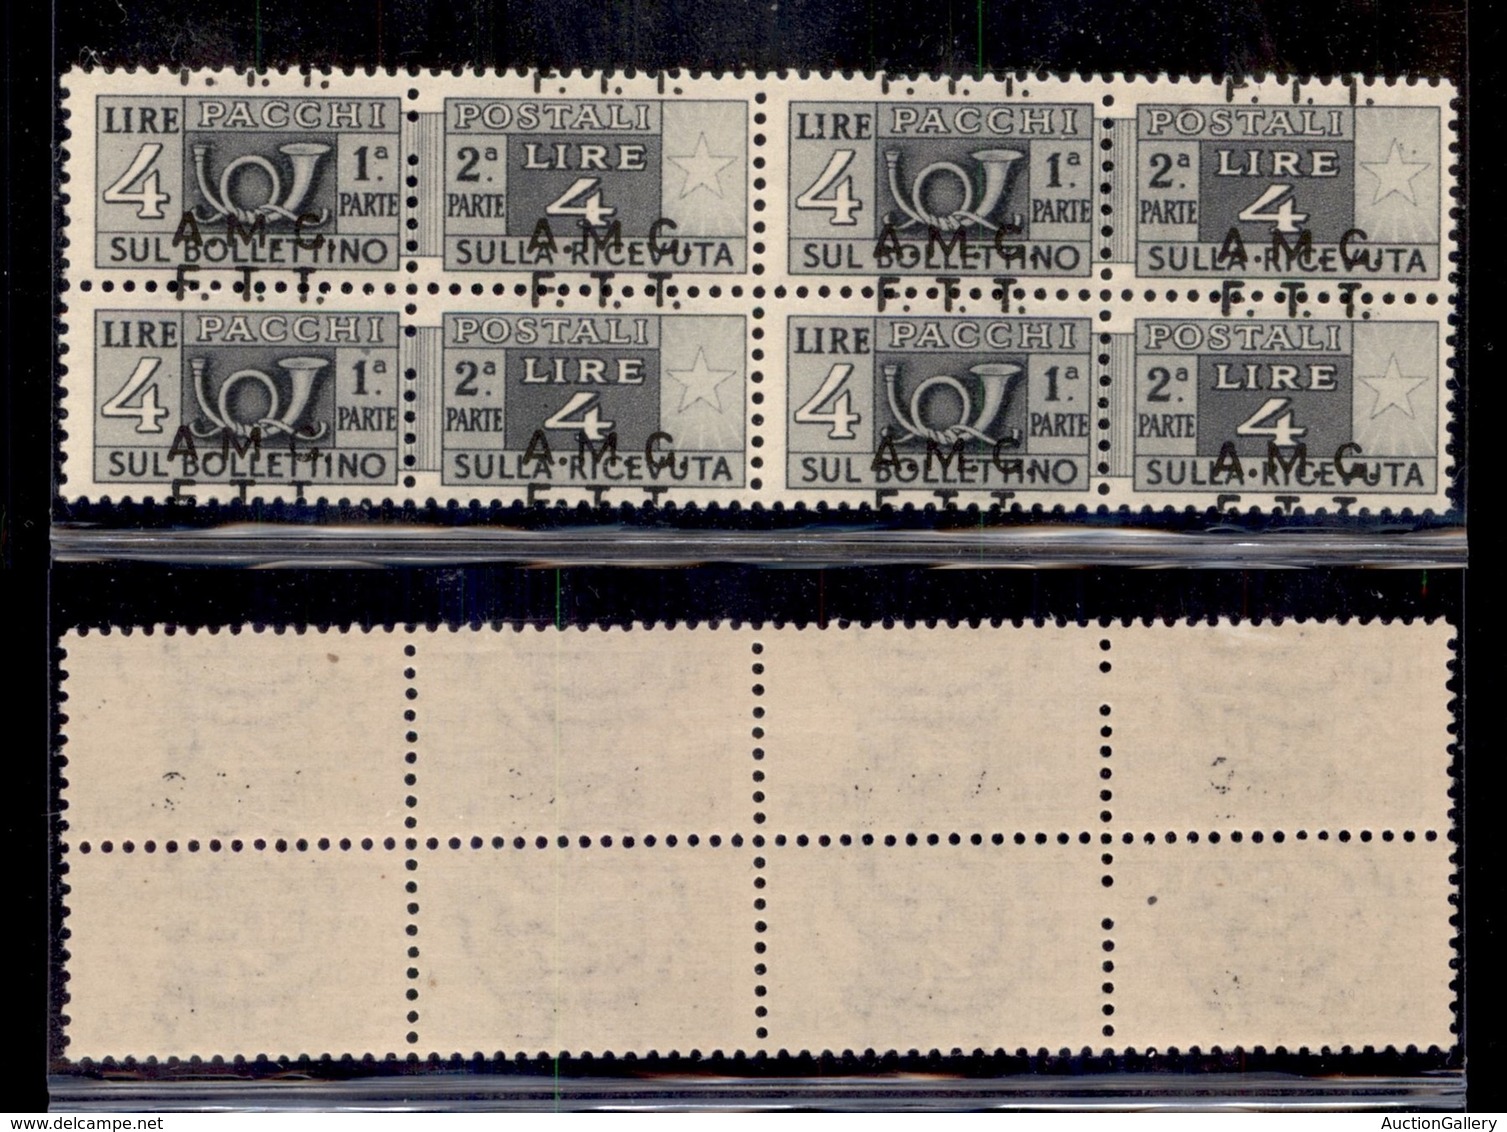 TRIESTE - AMG-FTT - 1947 - 4 Lire Pacchi Postali (4 G) - Quartina Con Soprastampa Spostata In Senso Verticale - Gomma In - Mint/hinged